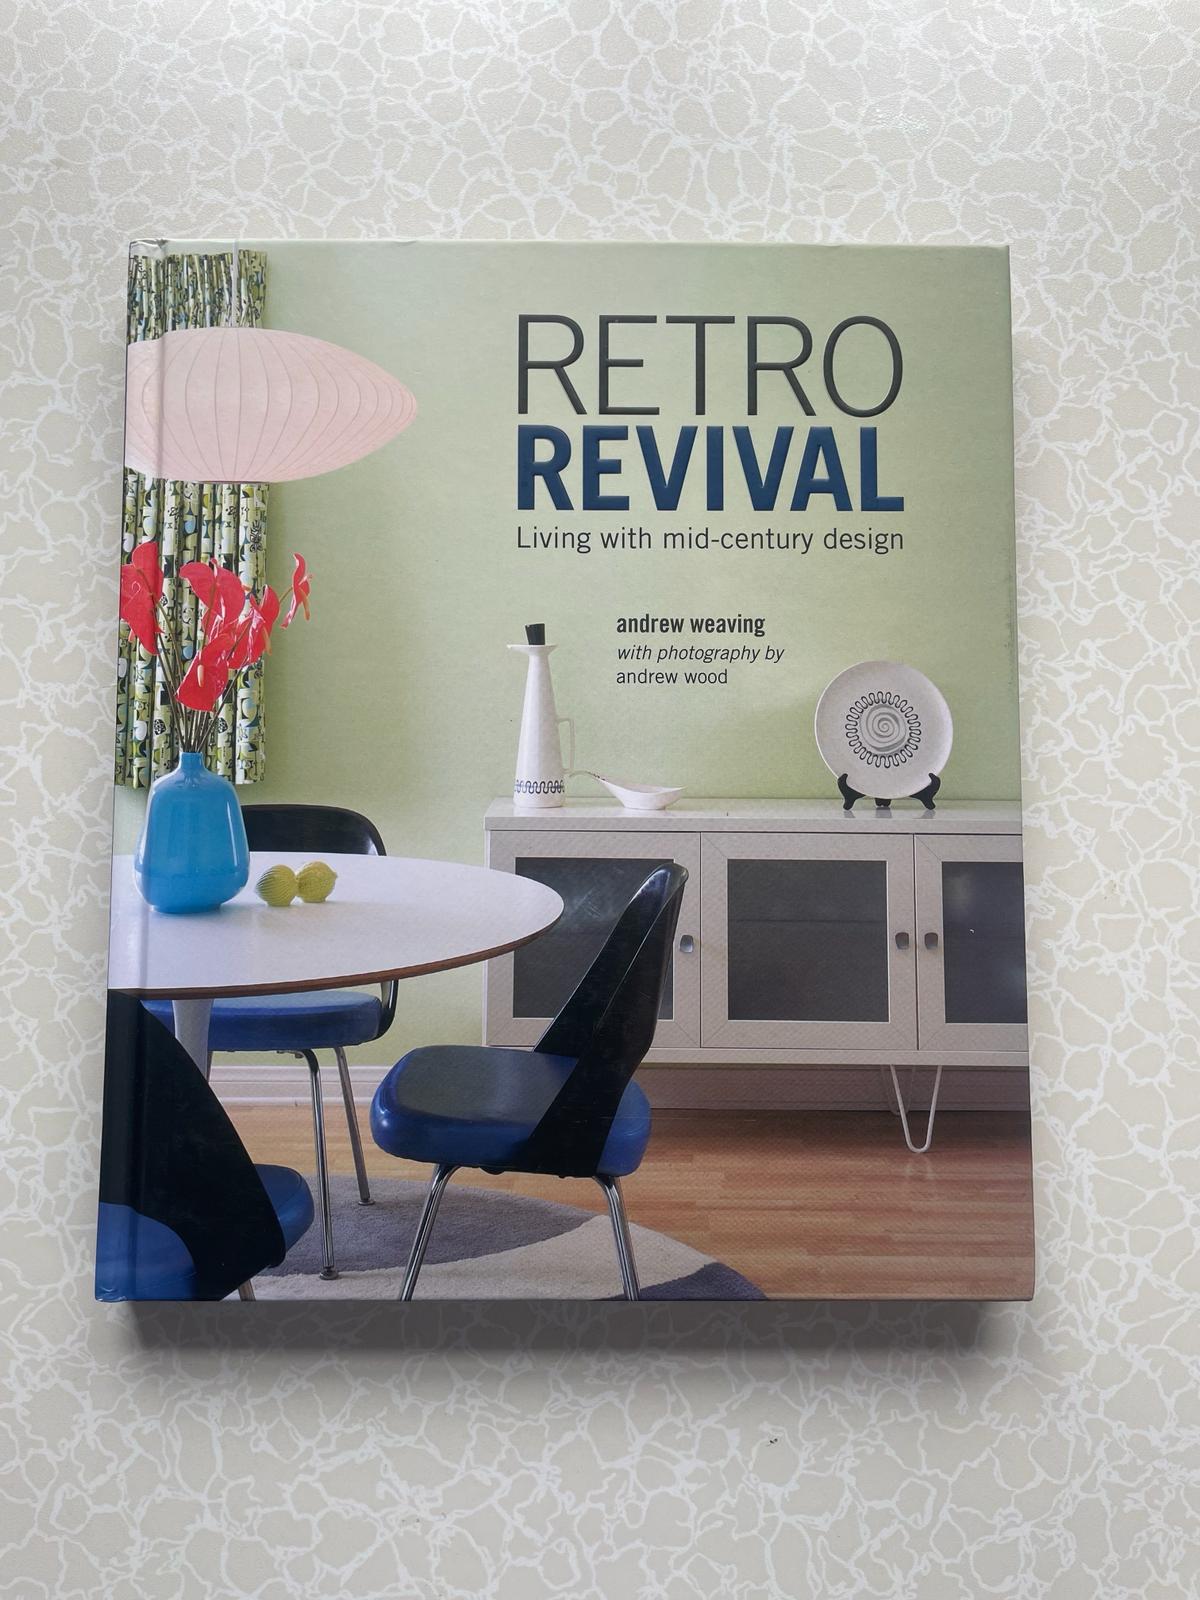 Retro revival hardcover book